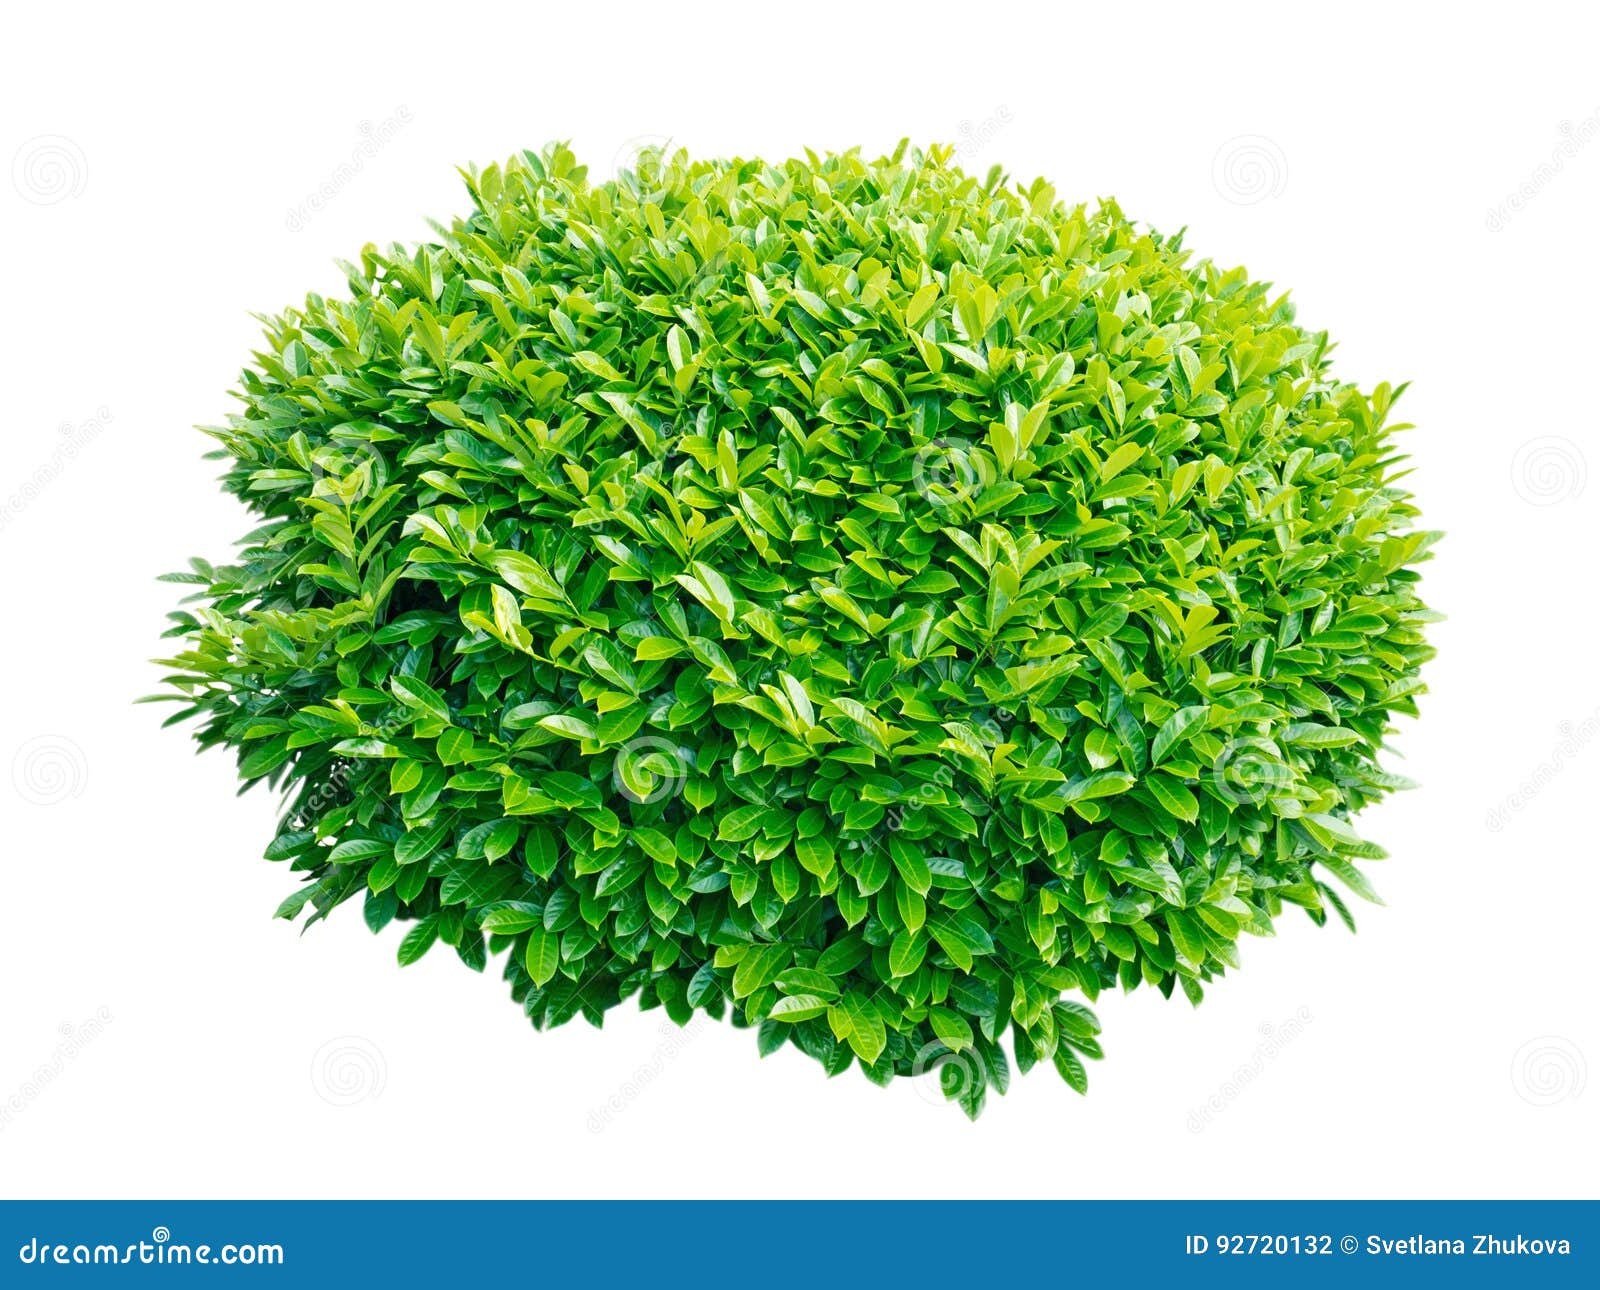 green laurel decorative shrub